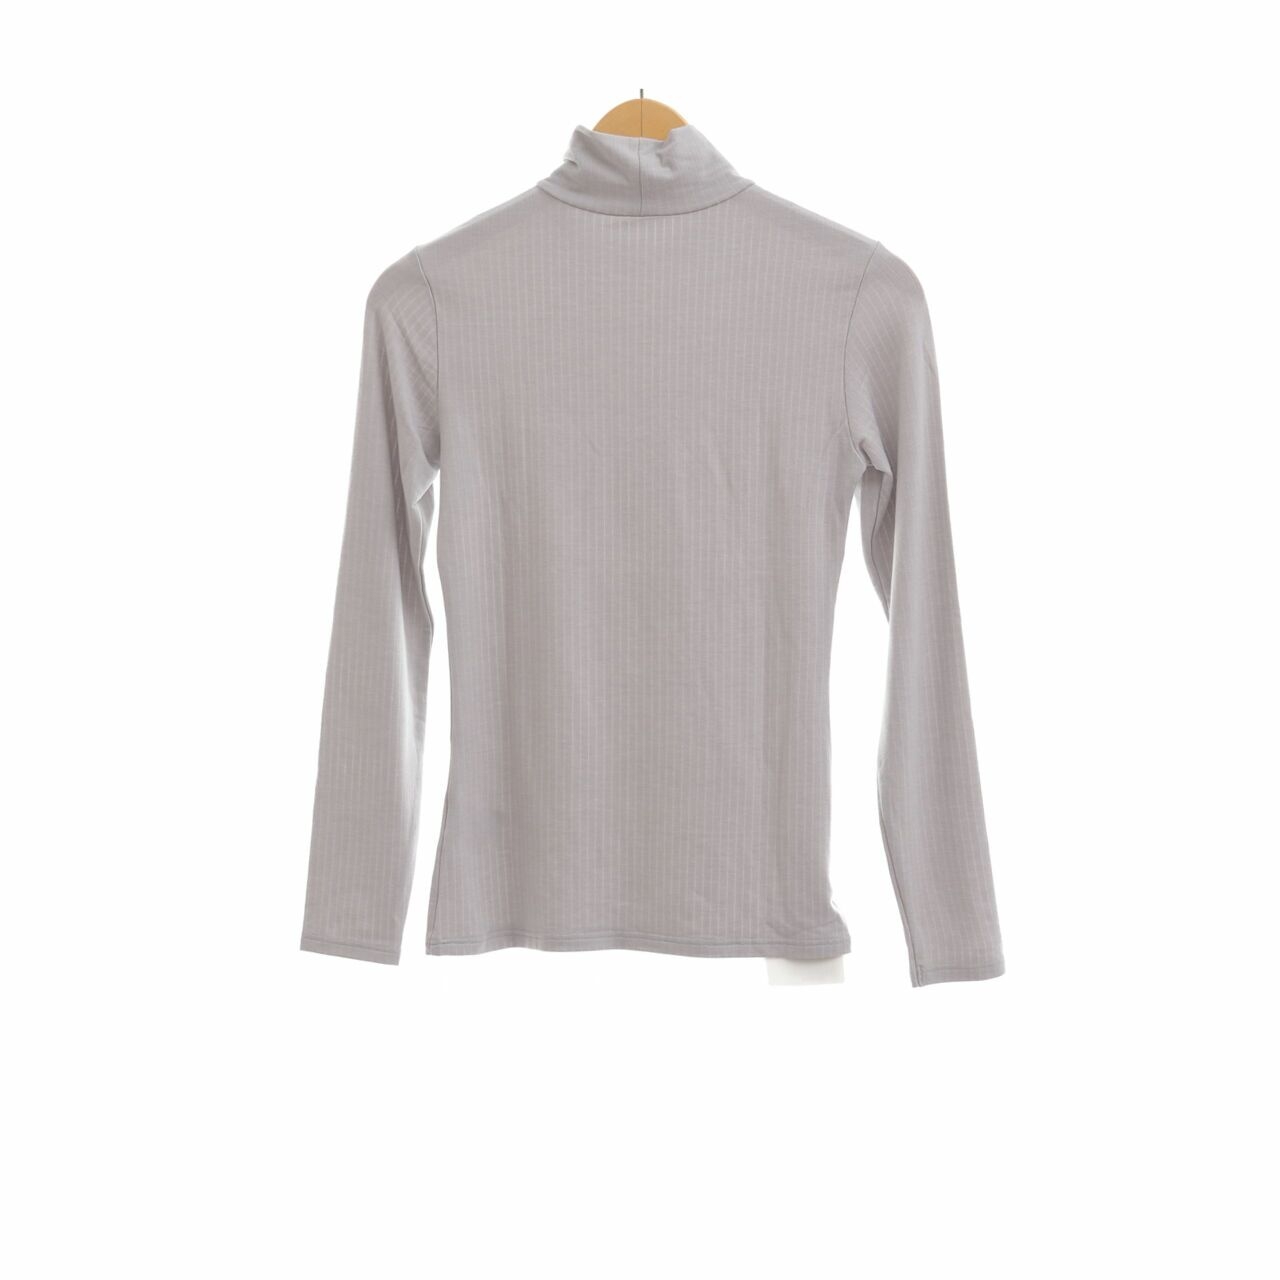 UNIQLO Grey Long Sleeve T-Shirt